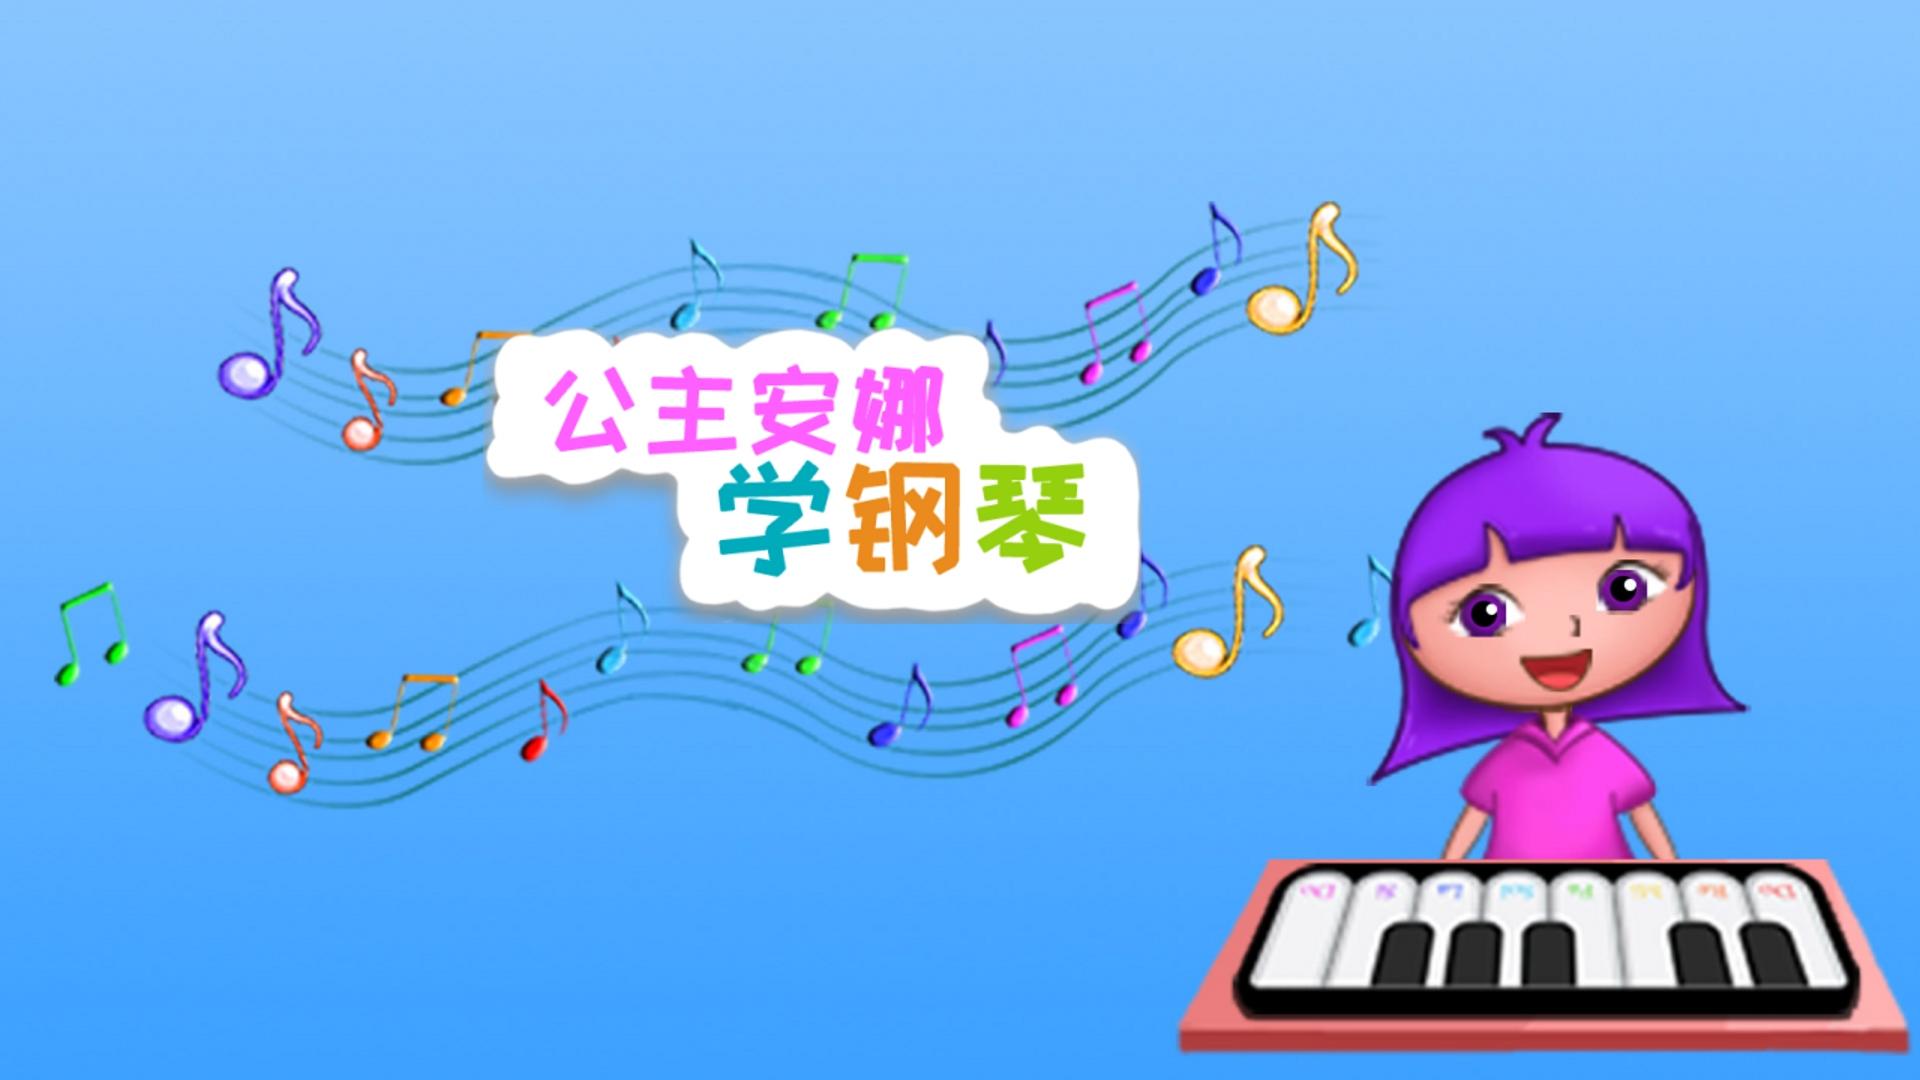 Banner of princesa anna aprende piano 